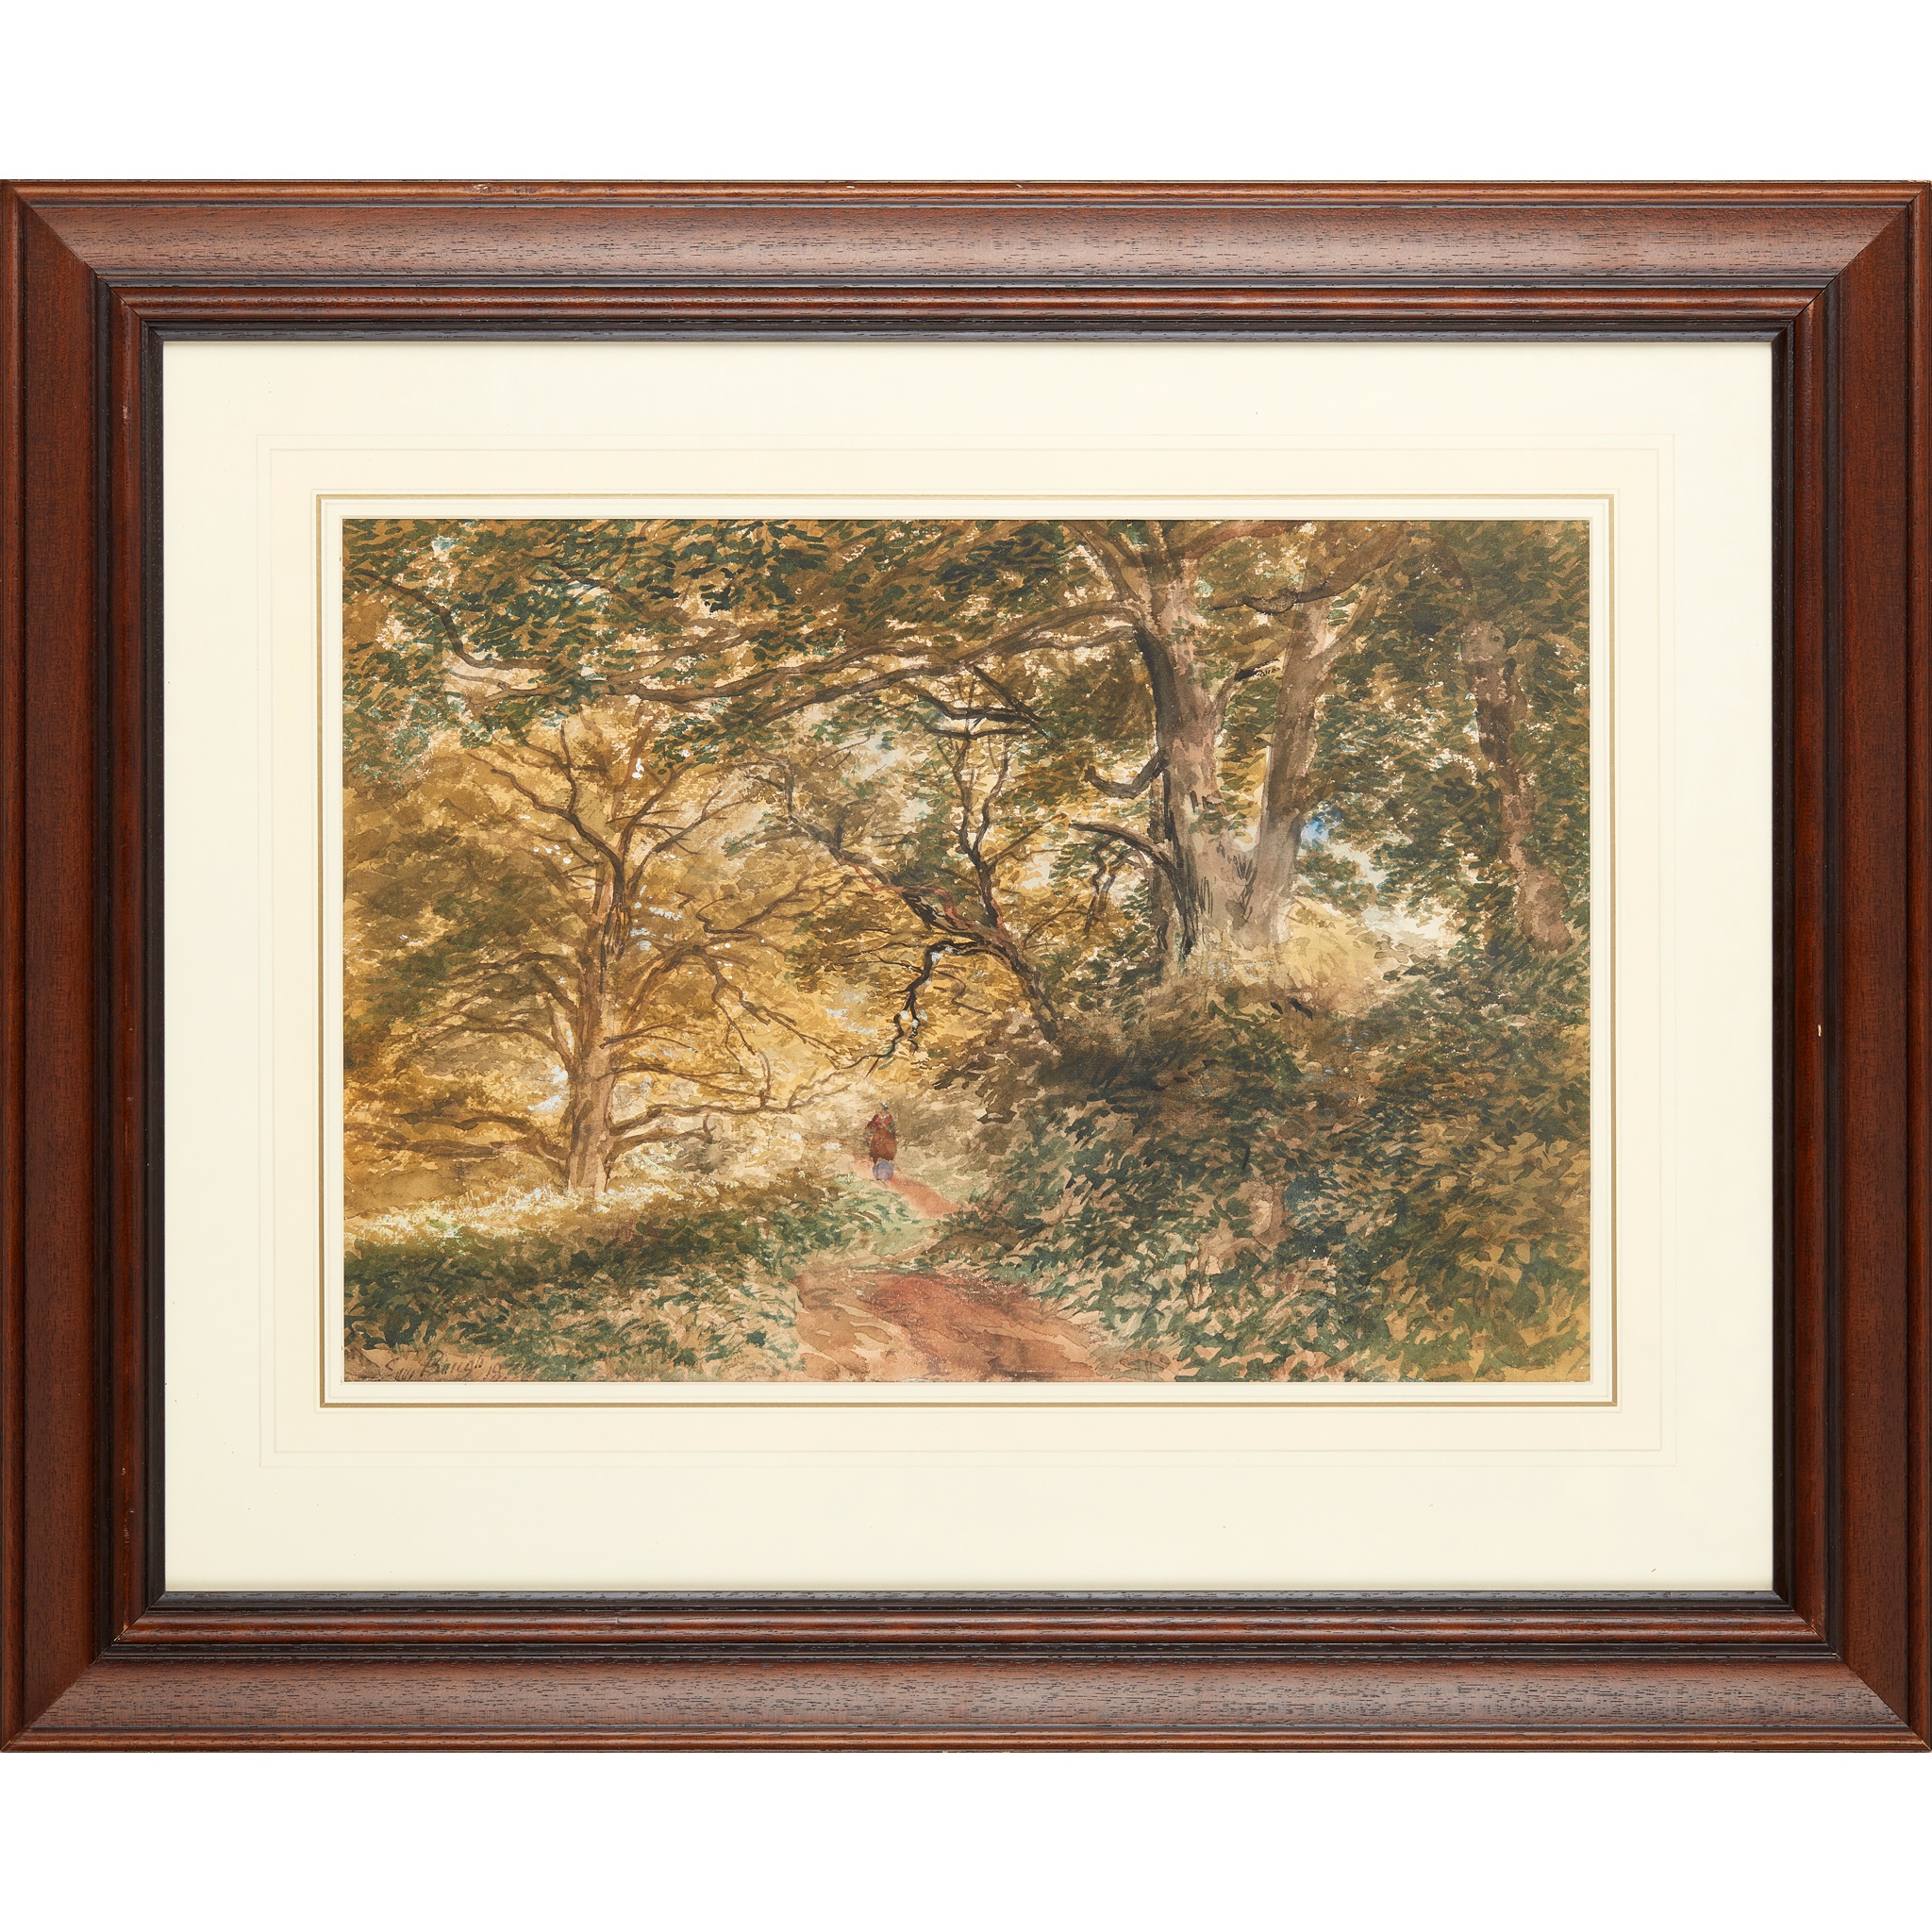 SAM BOUGH R.S.A, R.S.W. (SCOTTISH 1822-1878) CADZOW FOREST - Image 2 of 3